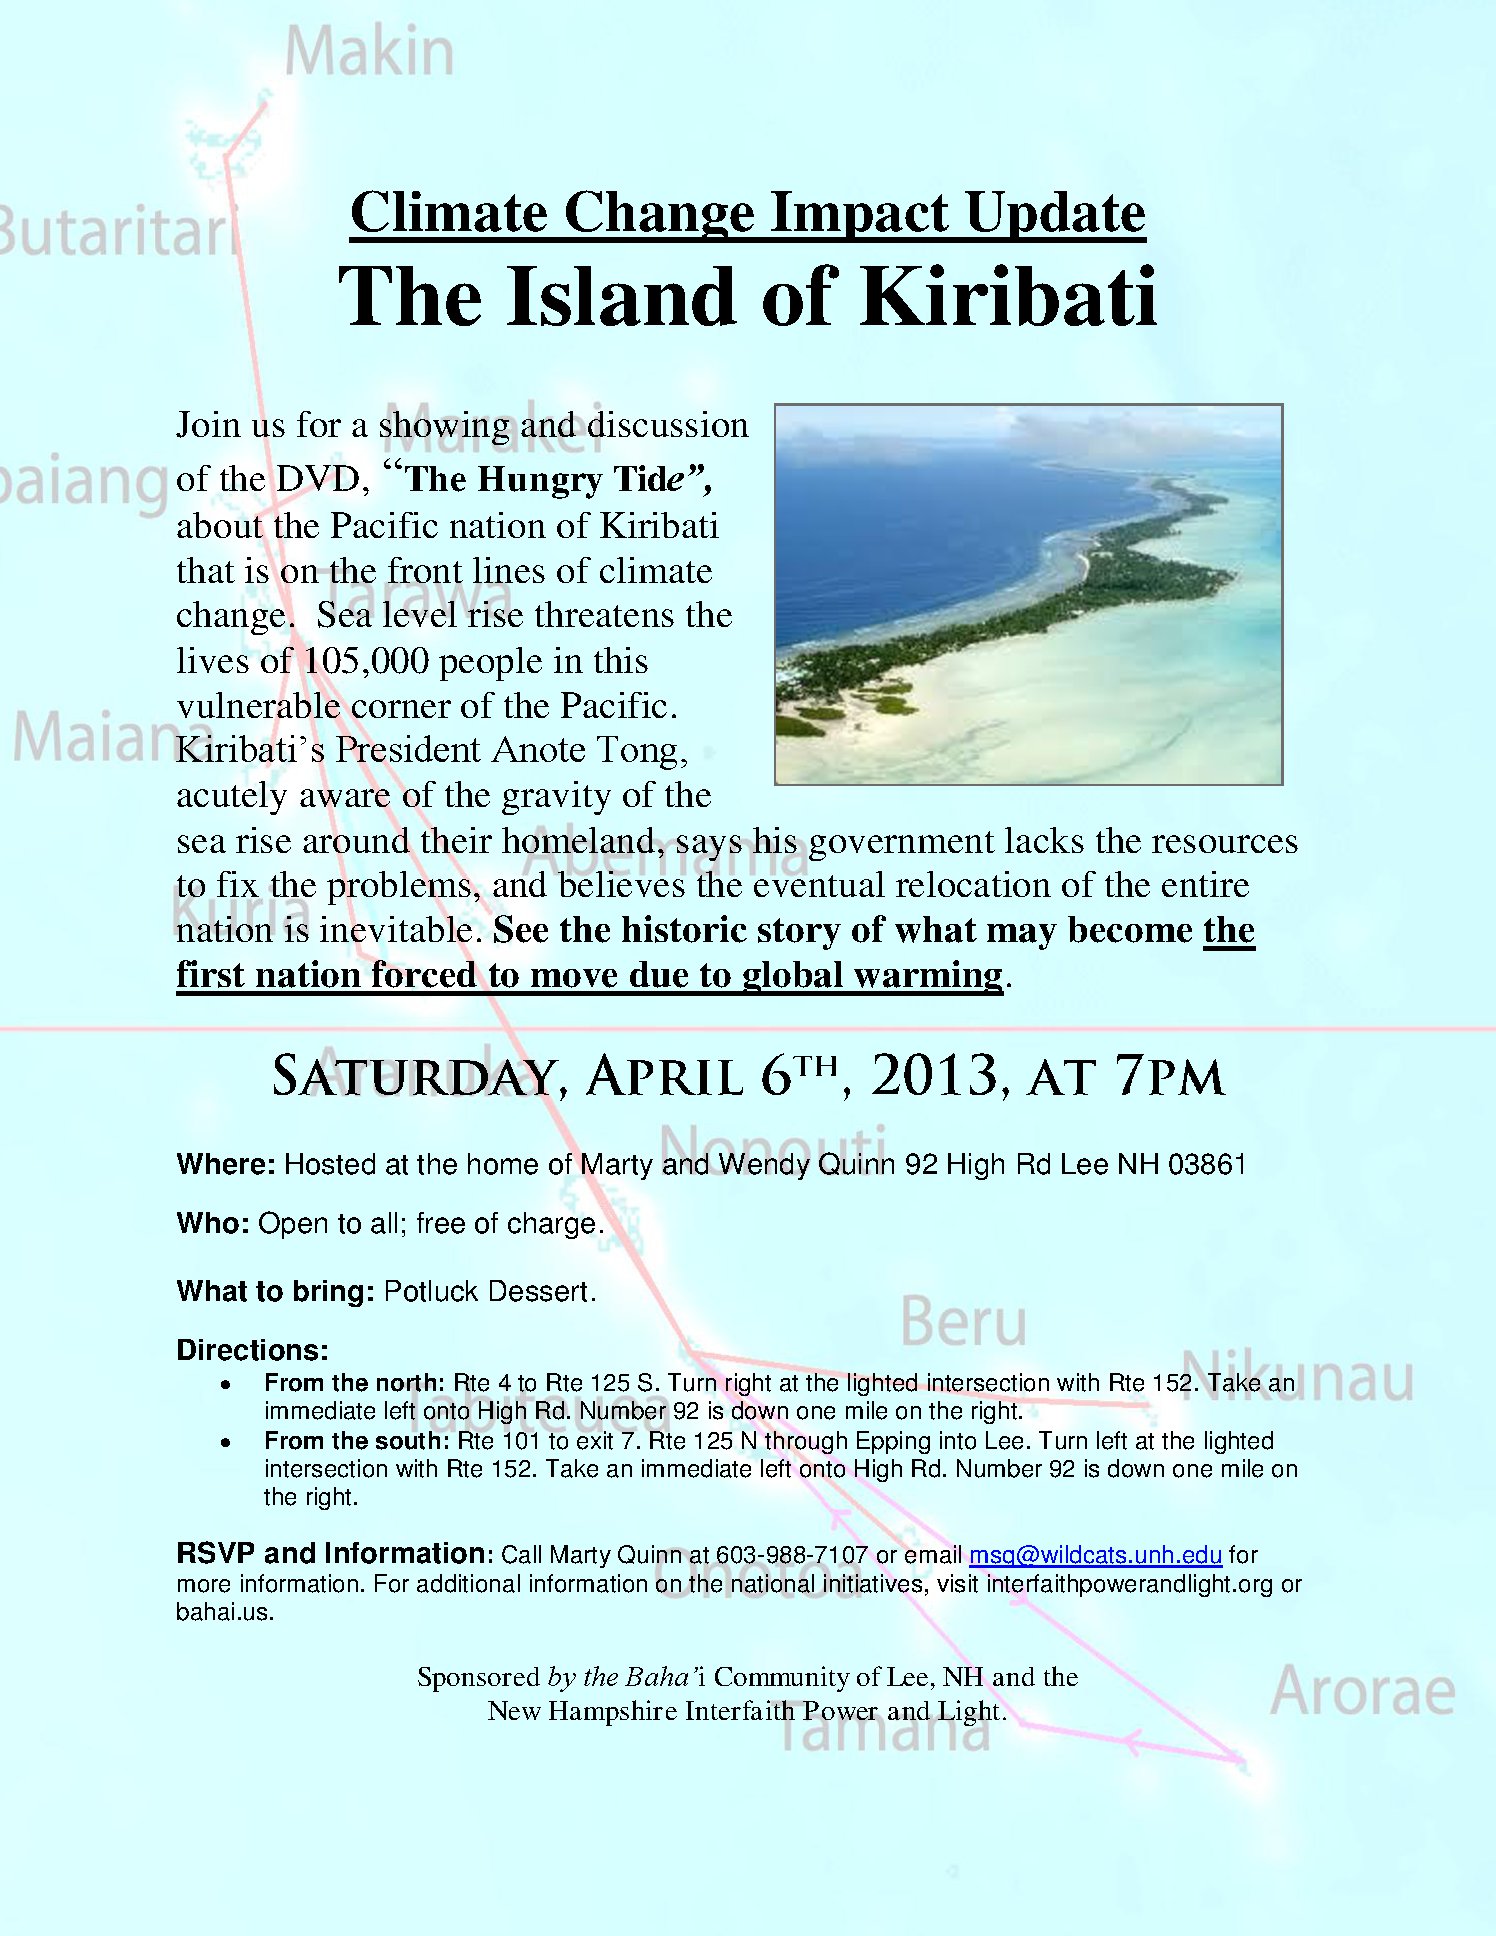 Climate Change Update: The Island Of Kiribati by marty